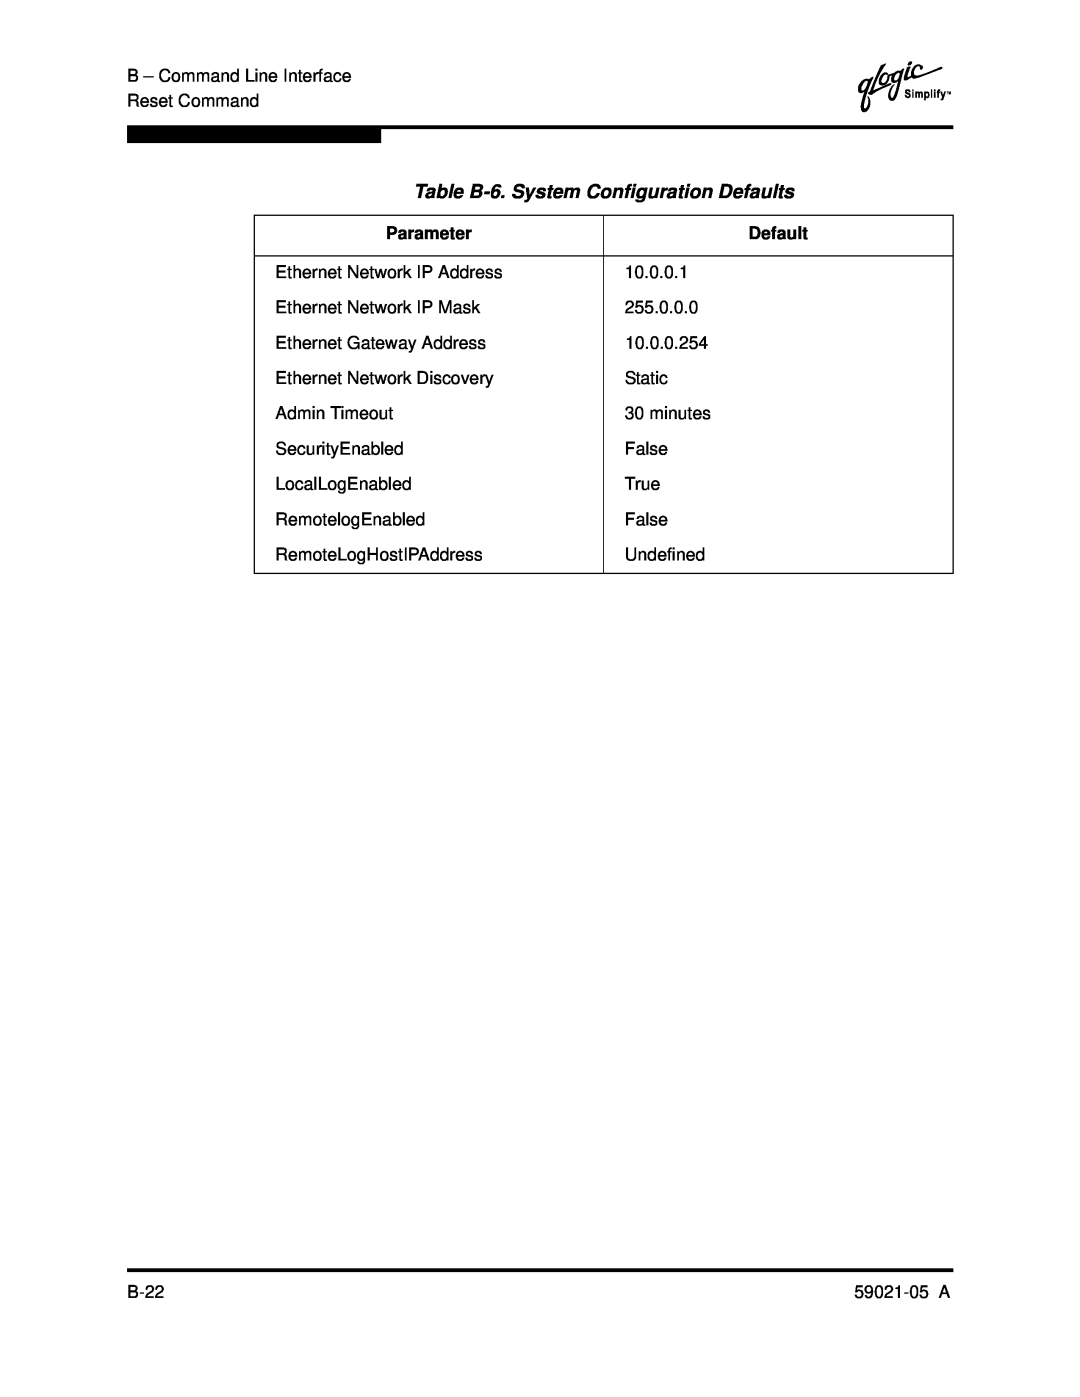 Q-Logic 59021-05 manual Table B-6. System Configuration Defaults, Parameter 